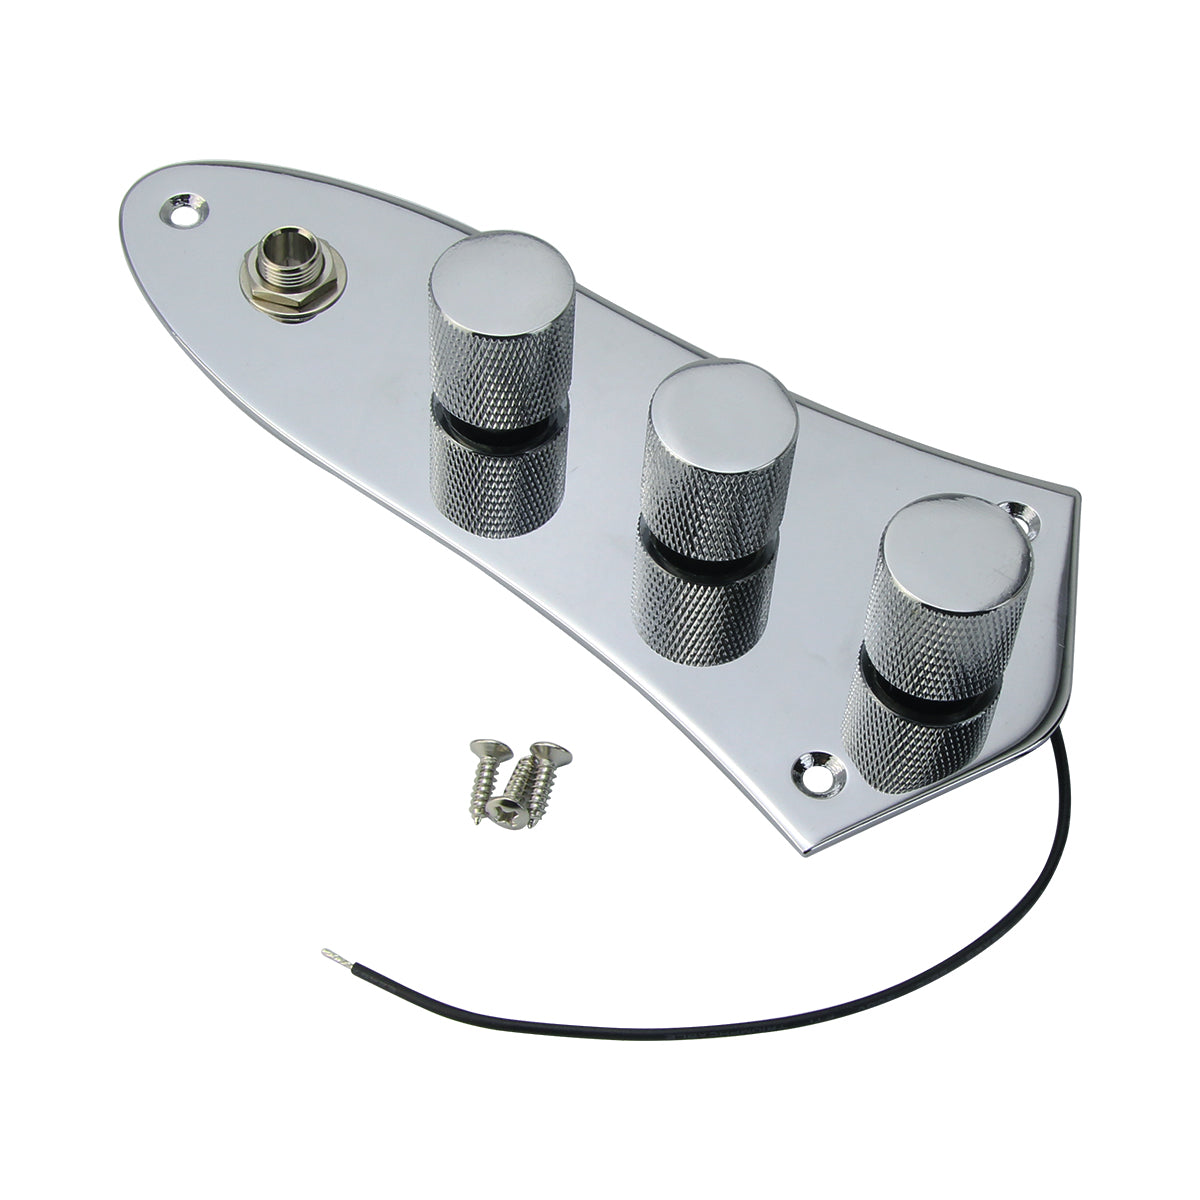 FLEOR Chrome Loaded Prewired Bass Control Plate Harness Jack Chrome Knobs for JB Bass Guitar Parts